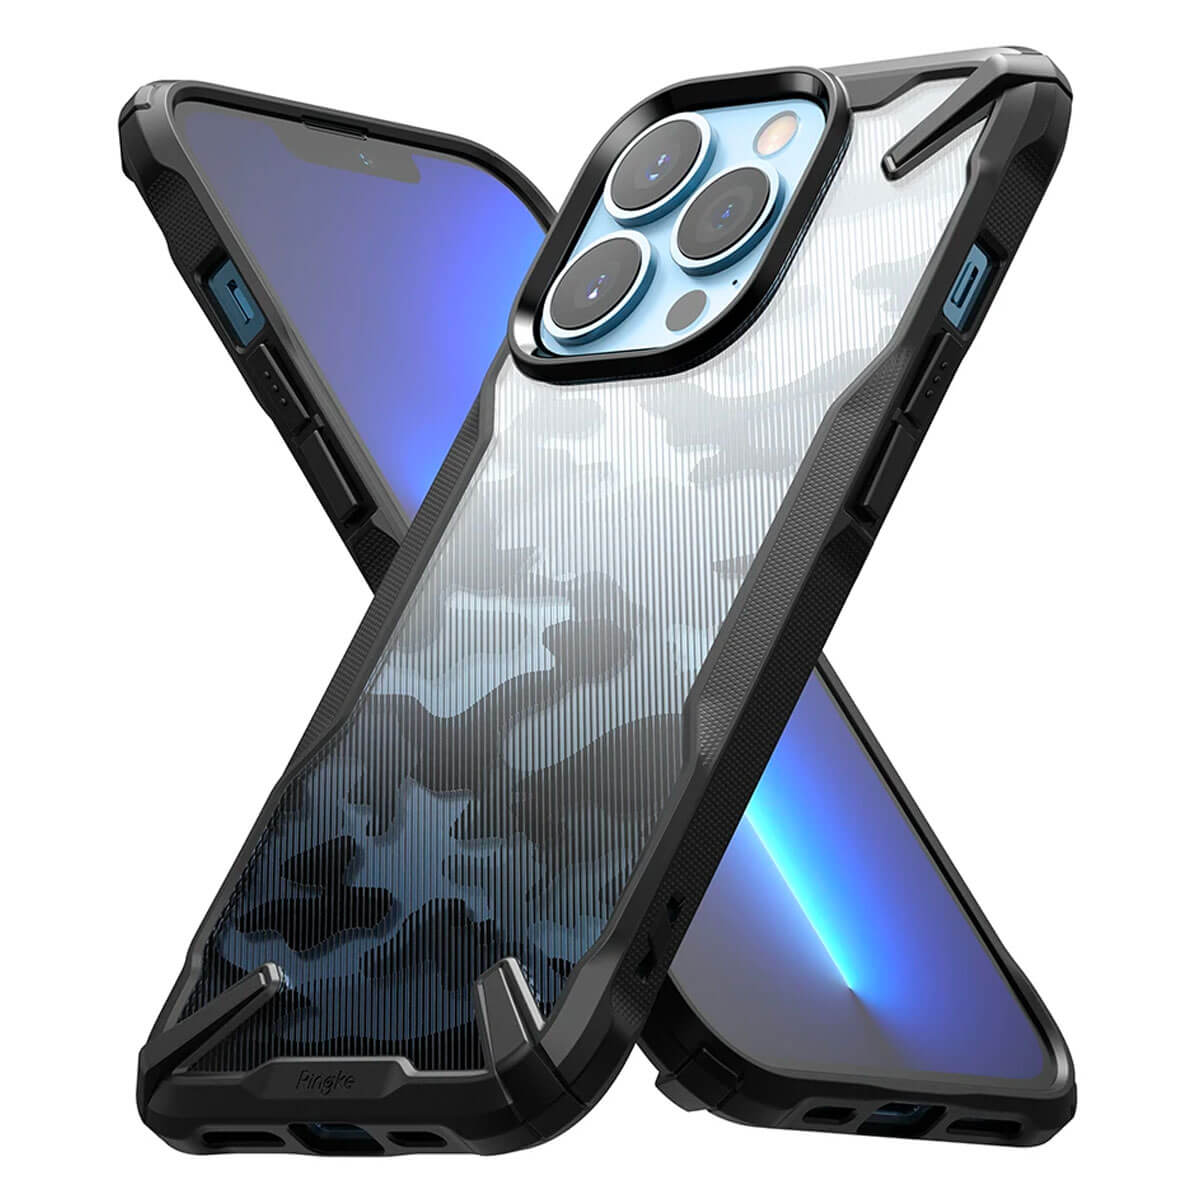 Ringke iPhone 13 Pro Case Fusion X Design Camo Black